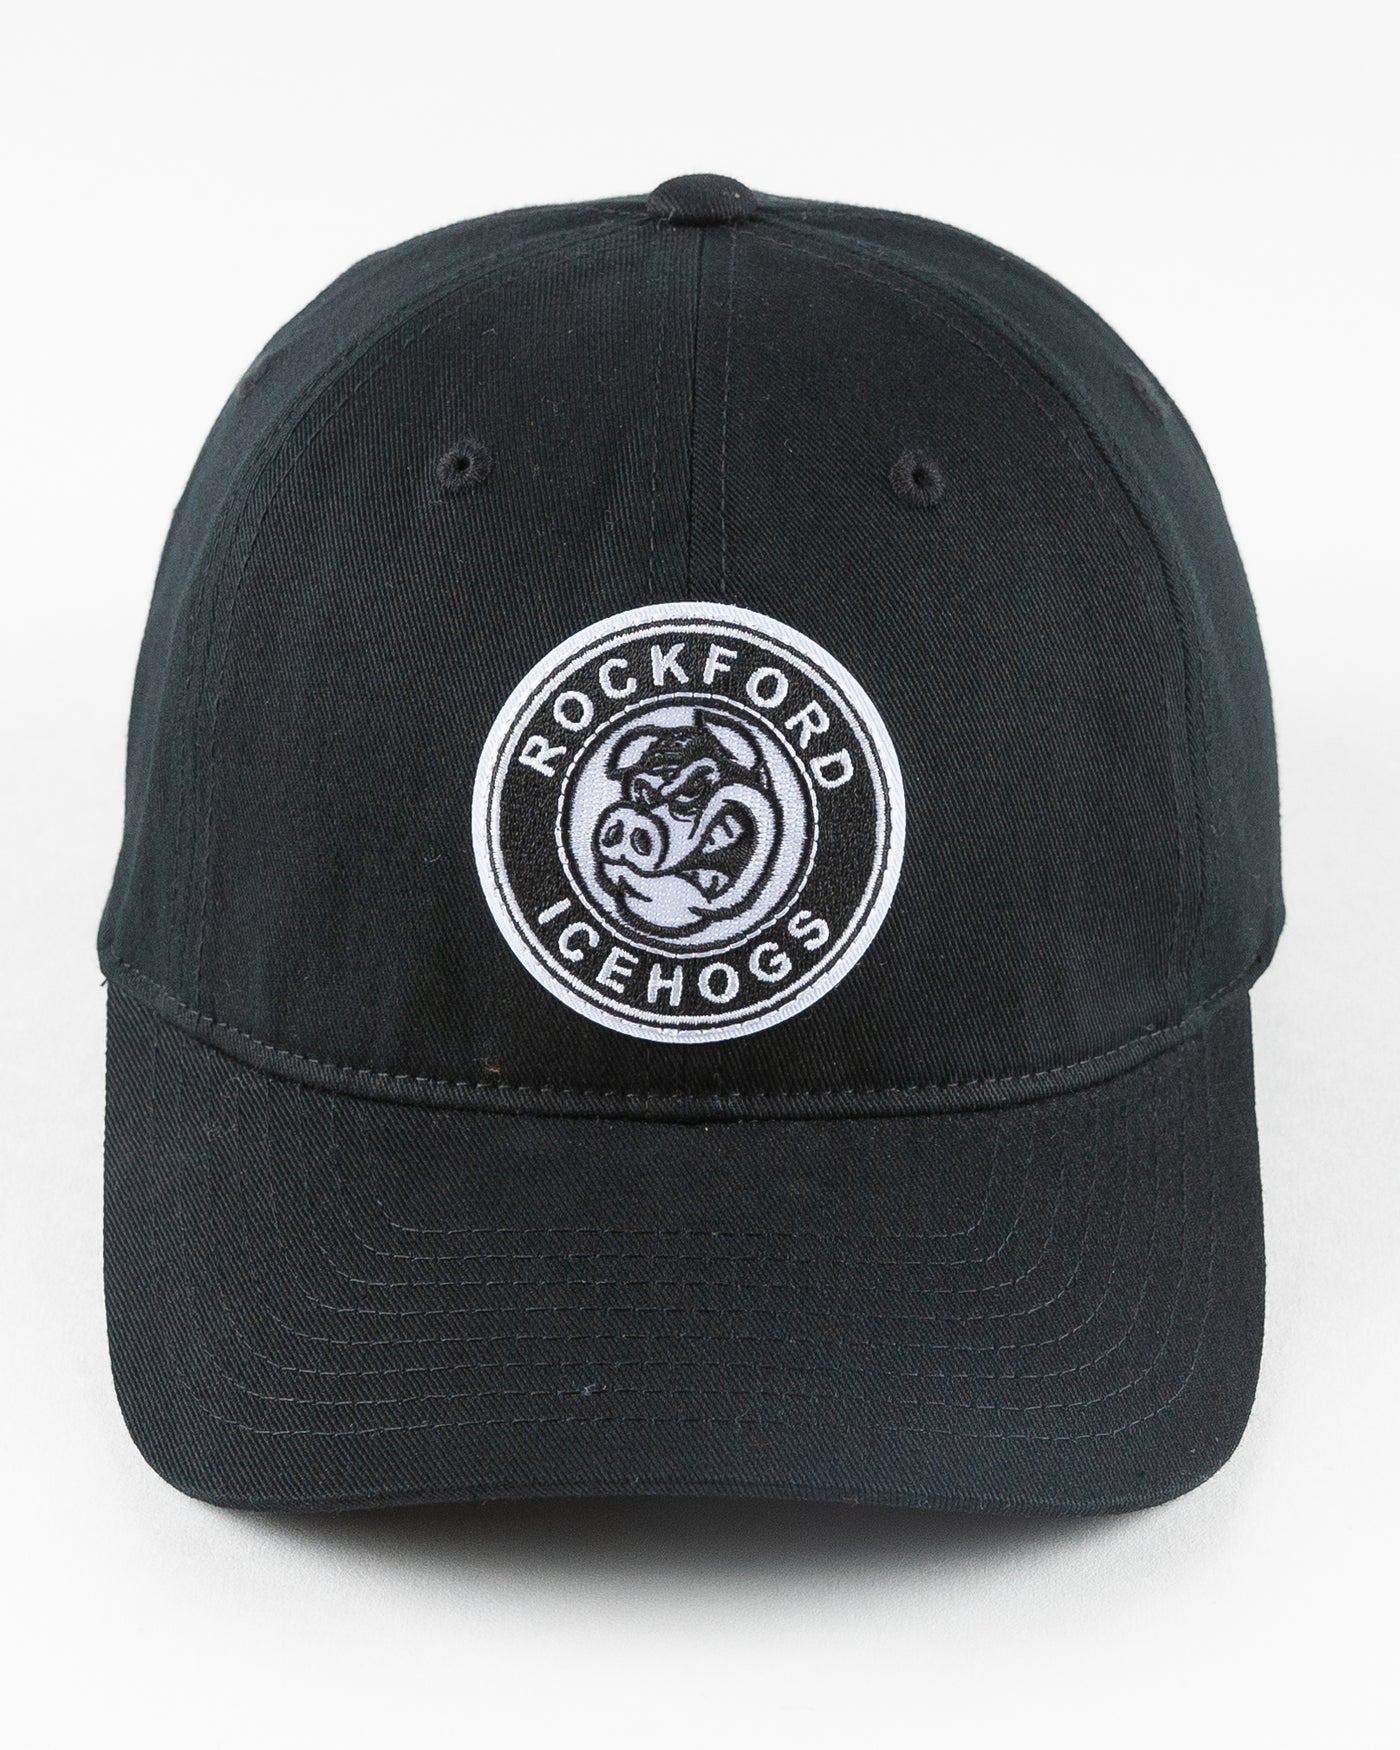 black Rockford IceHogs CCM baseball cap - front lay flat